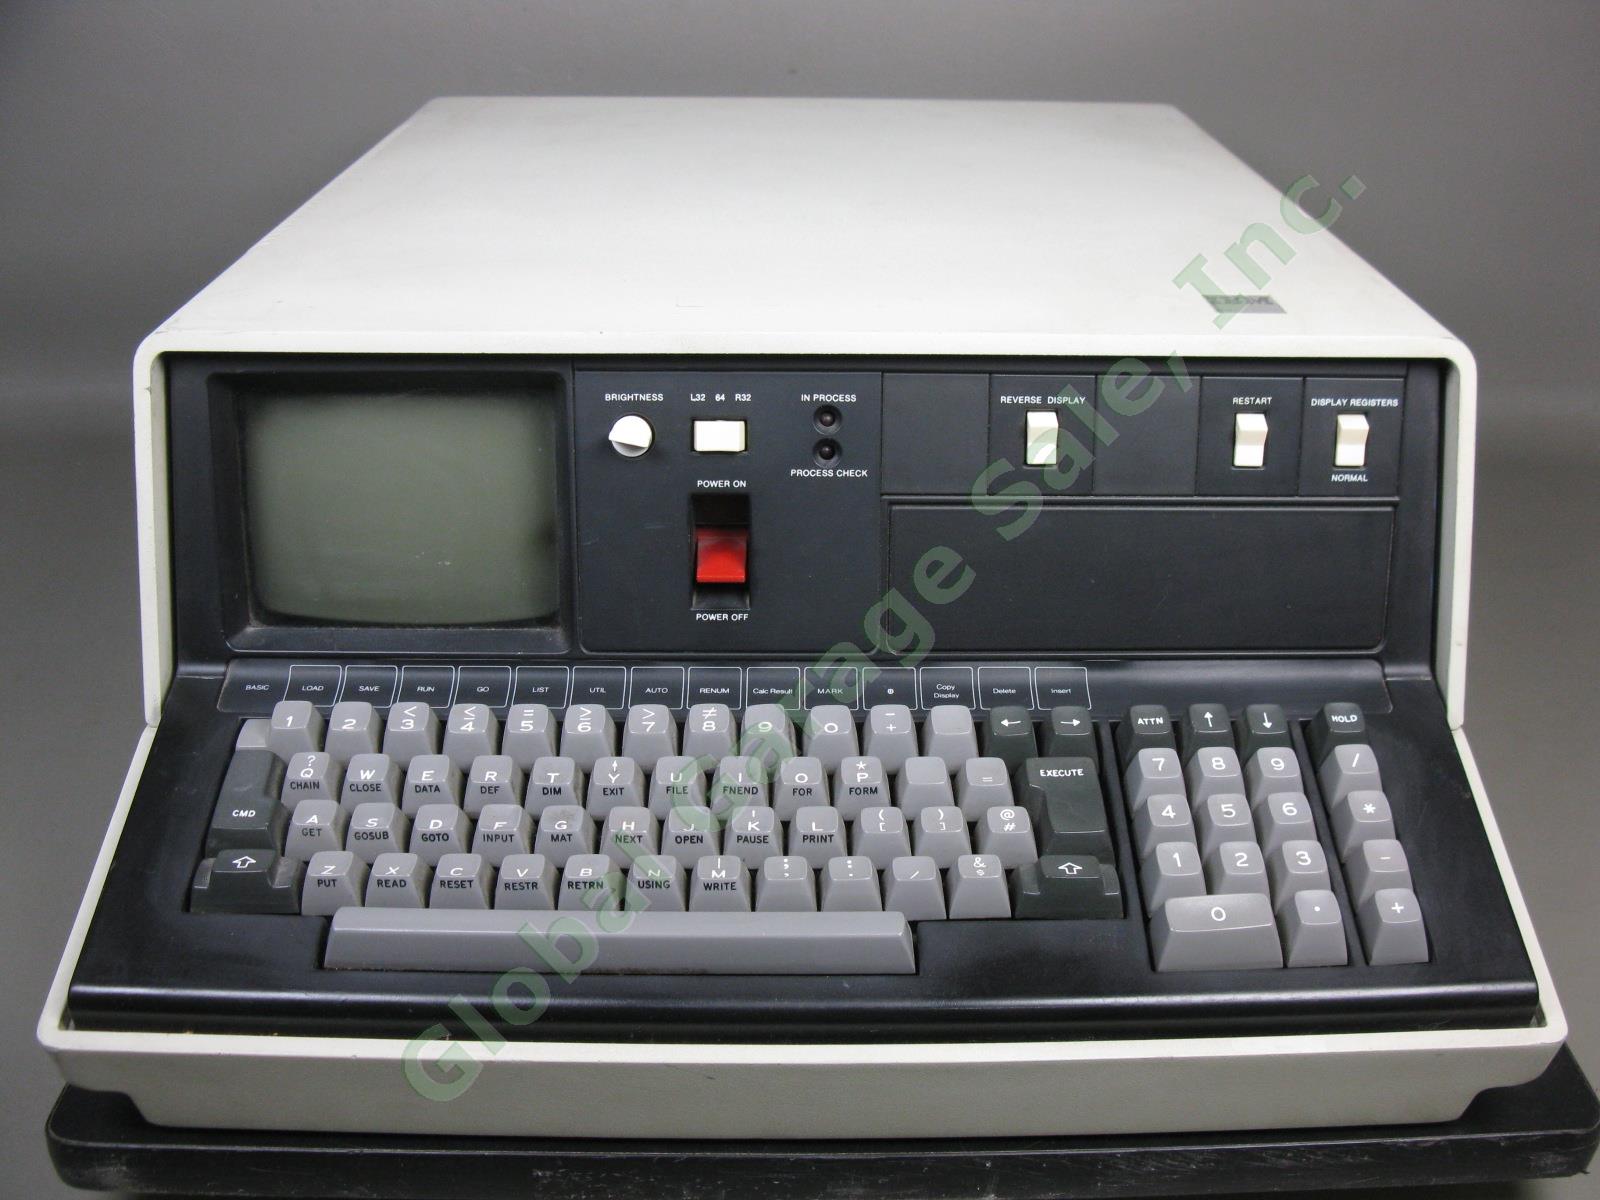 Vtg 1979 IBM 5110 Computing System Portable PC Computer 1.9MHz 16K-64K RAM BASIC